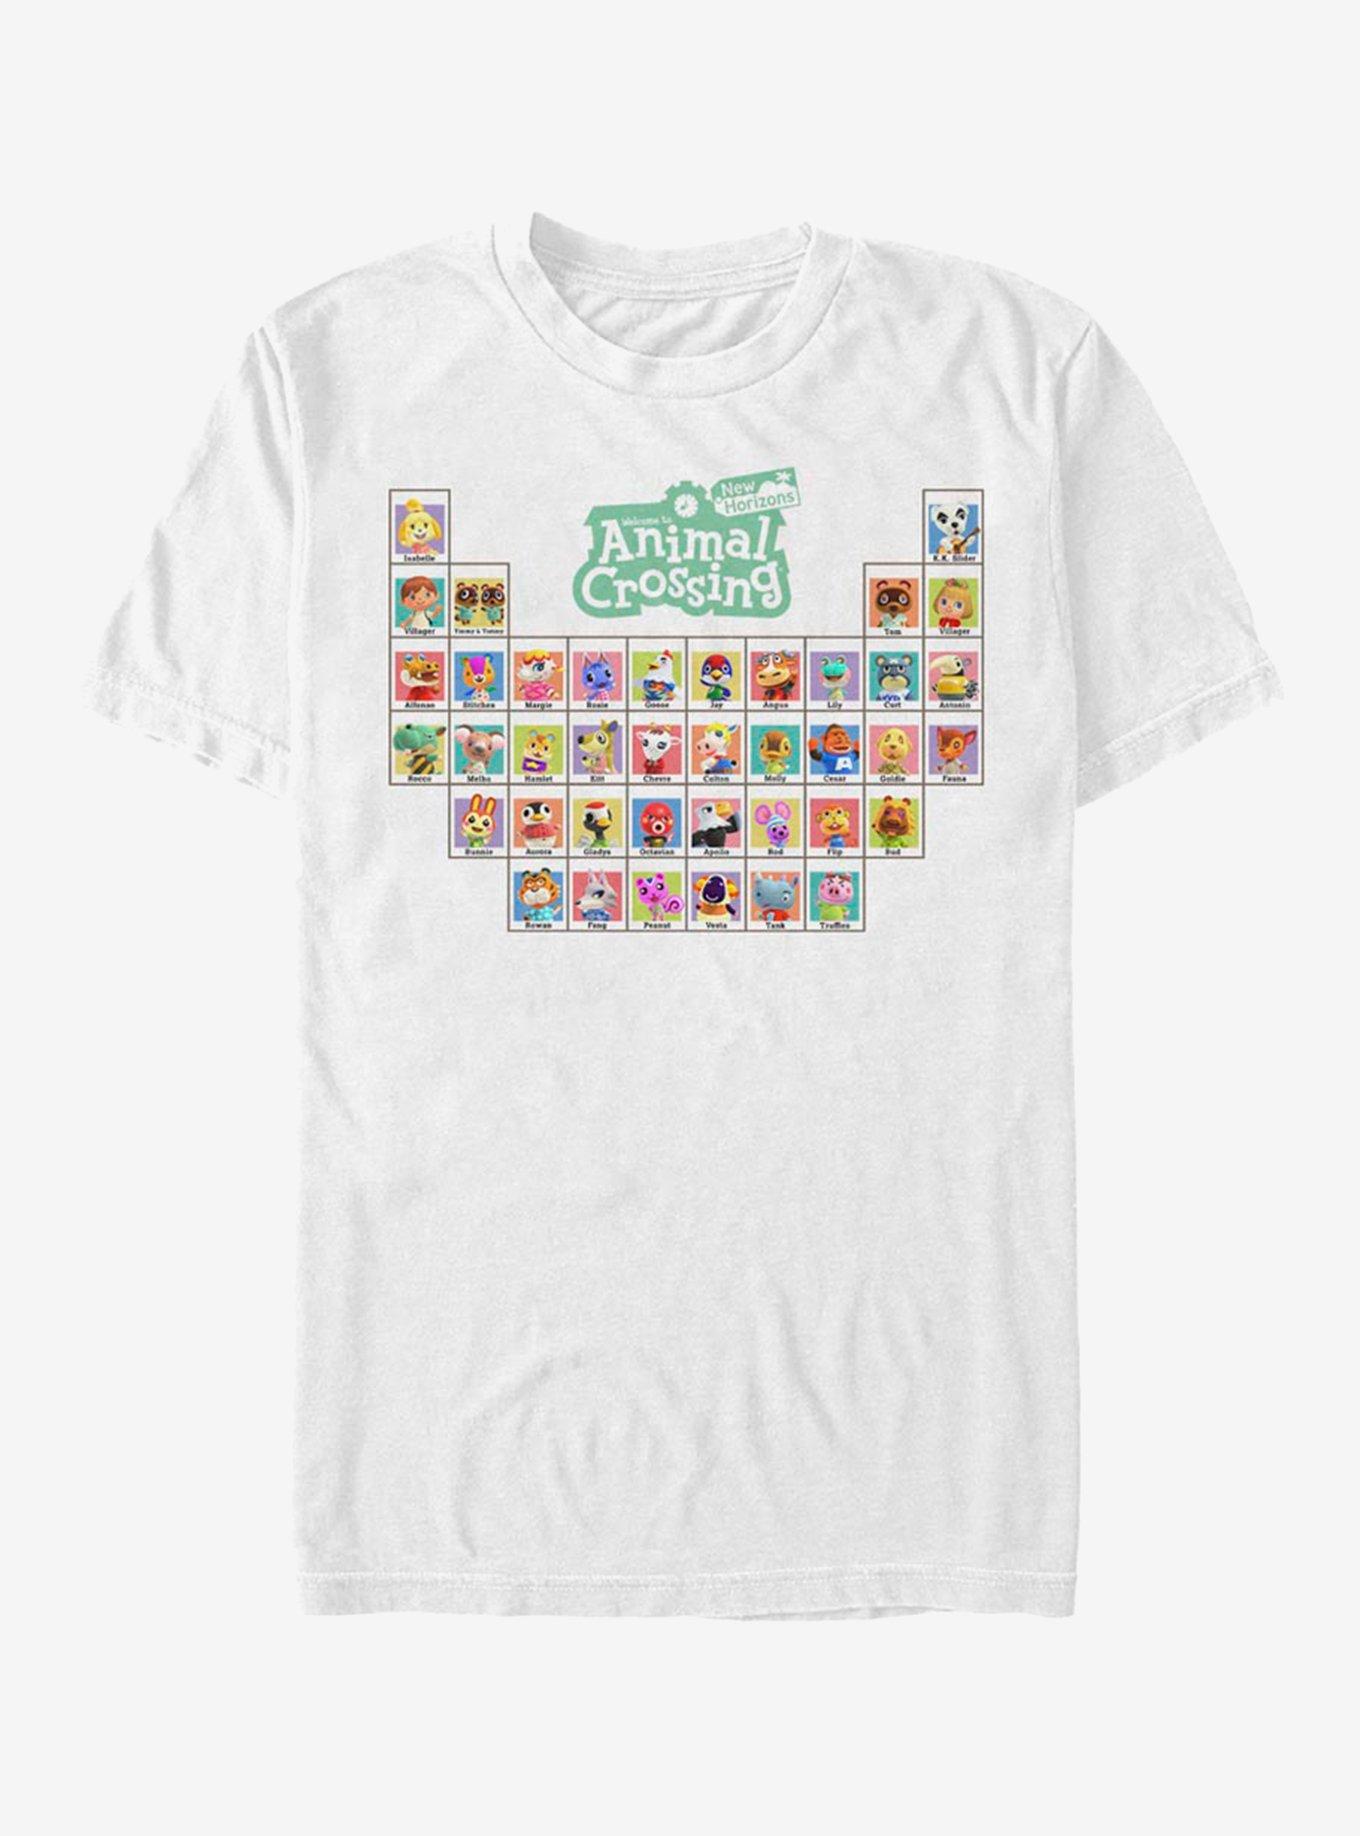 Extra Soft Nintendo Animal Crossing Periodically T-Shirt